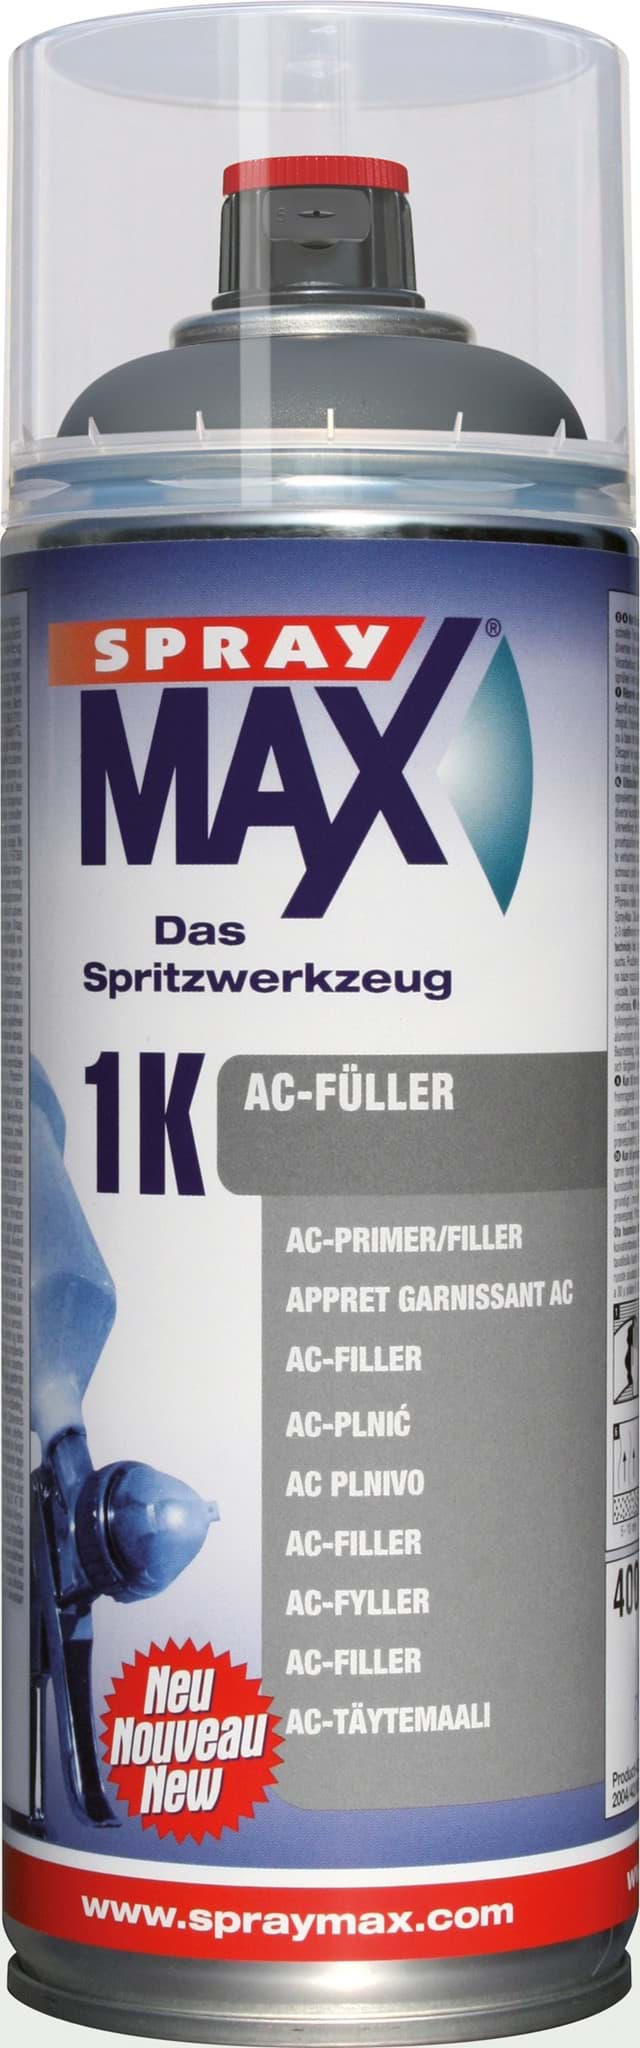 SprayMax 1K AC-Füller dunkelgrau Spray 400ml resmi